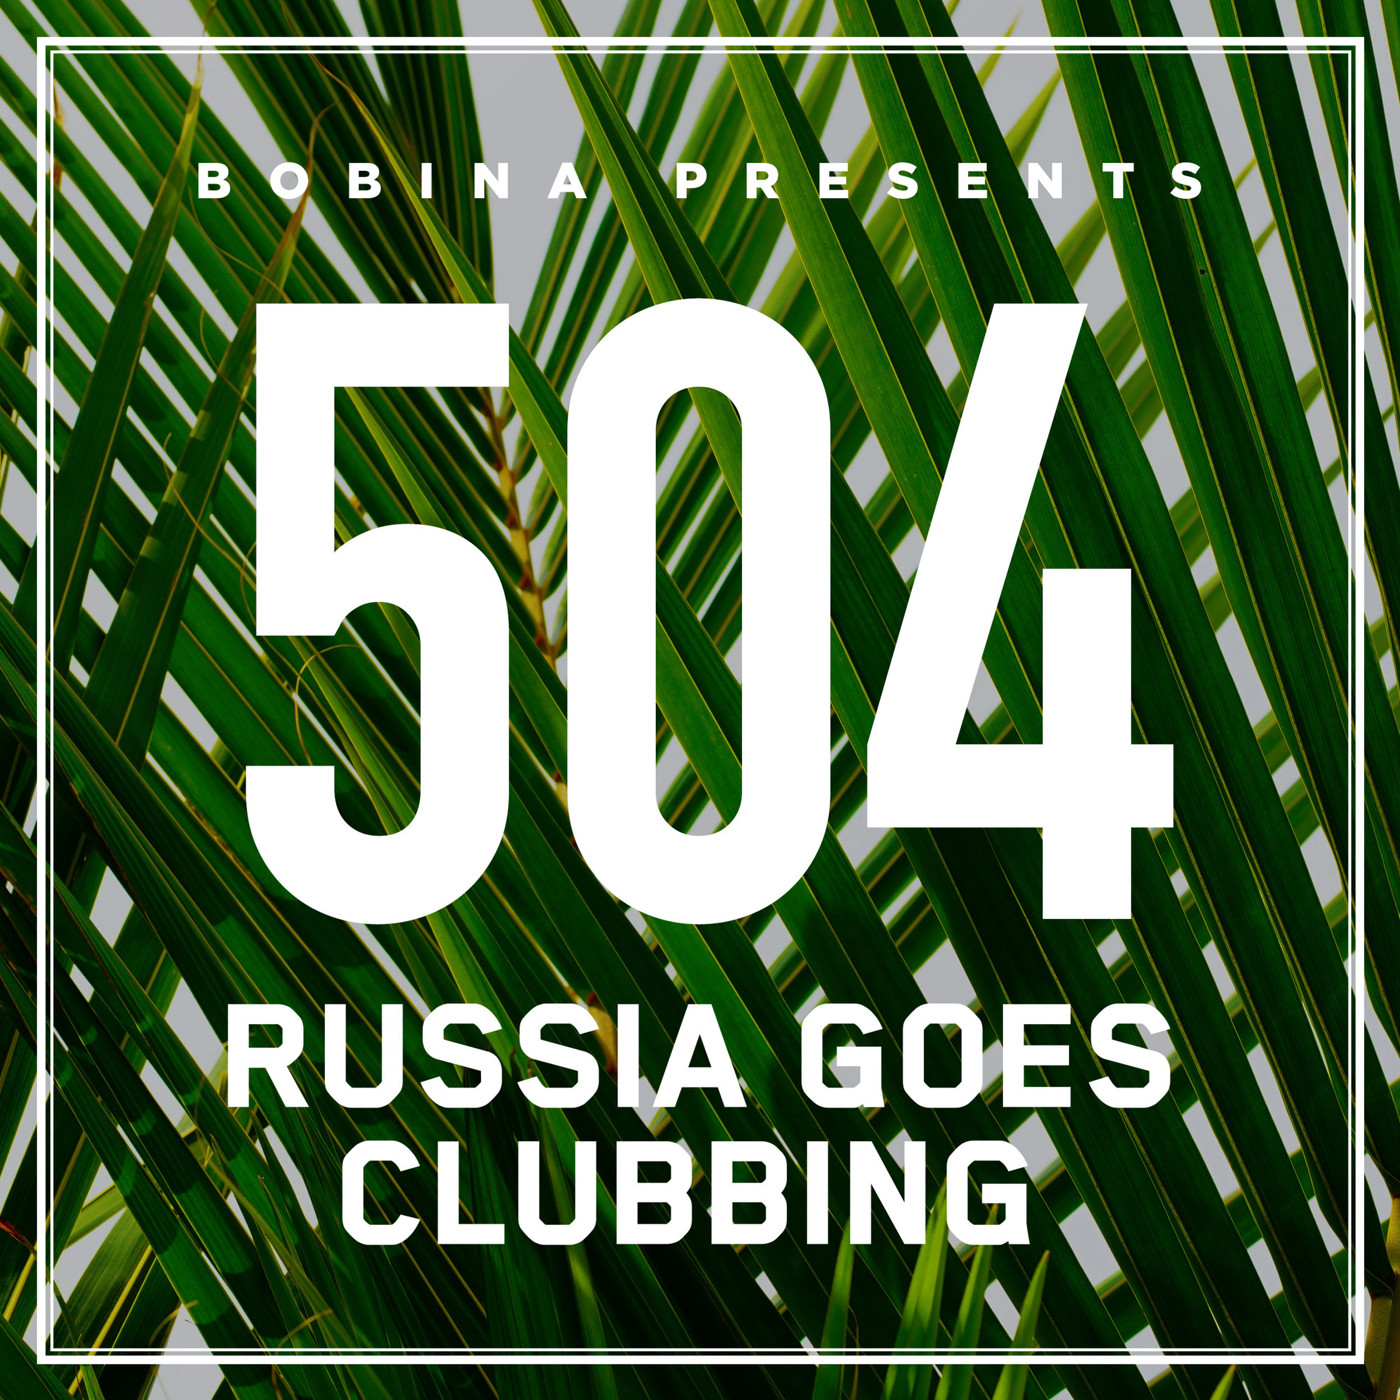 Bobina – Nr. 504 Russia Goes Clubbing (Eng)